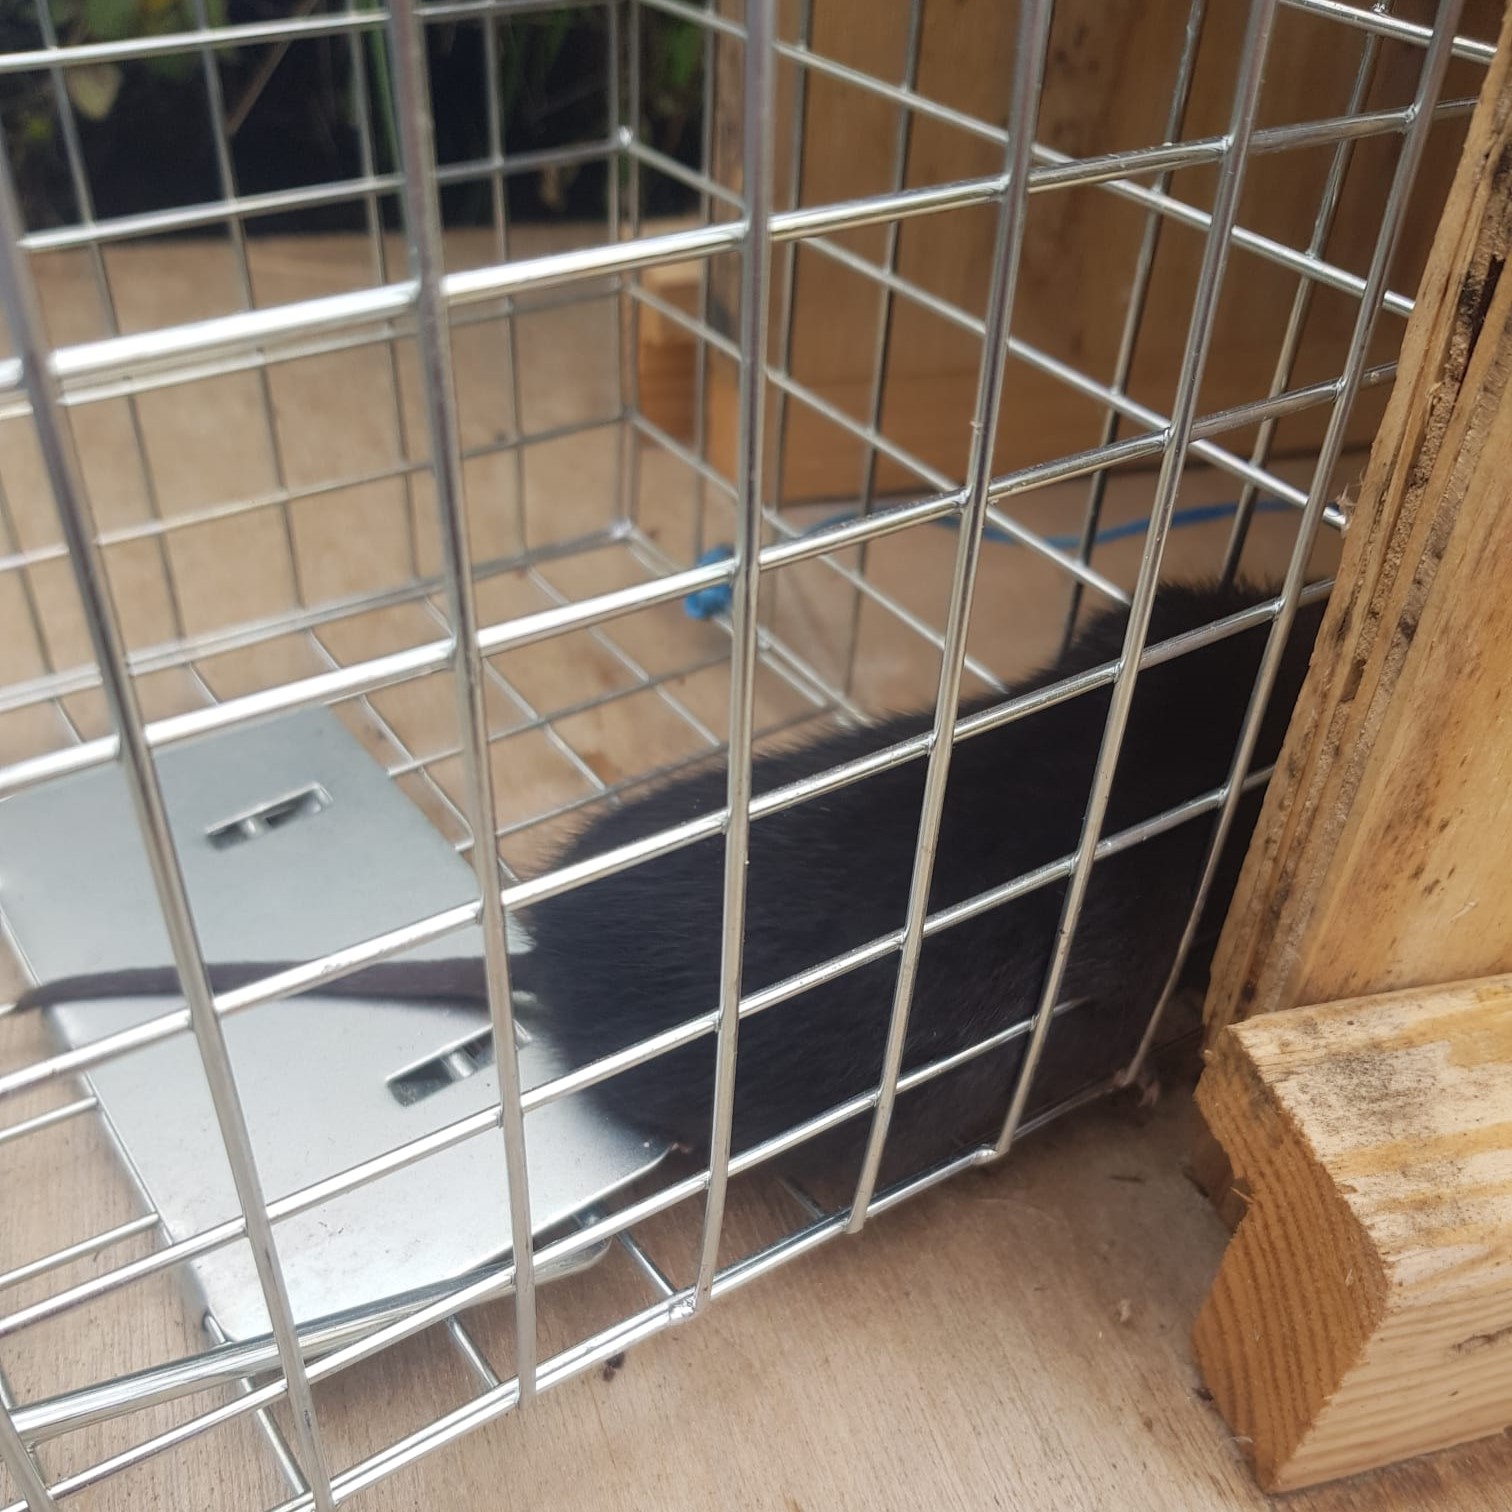 Water vole in mink trap on Spey